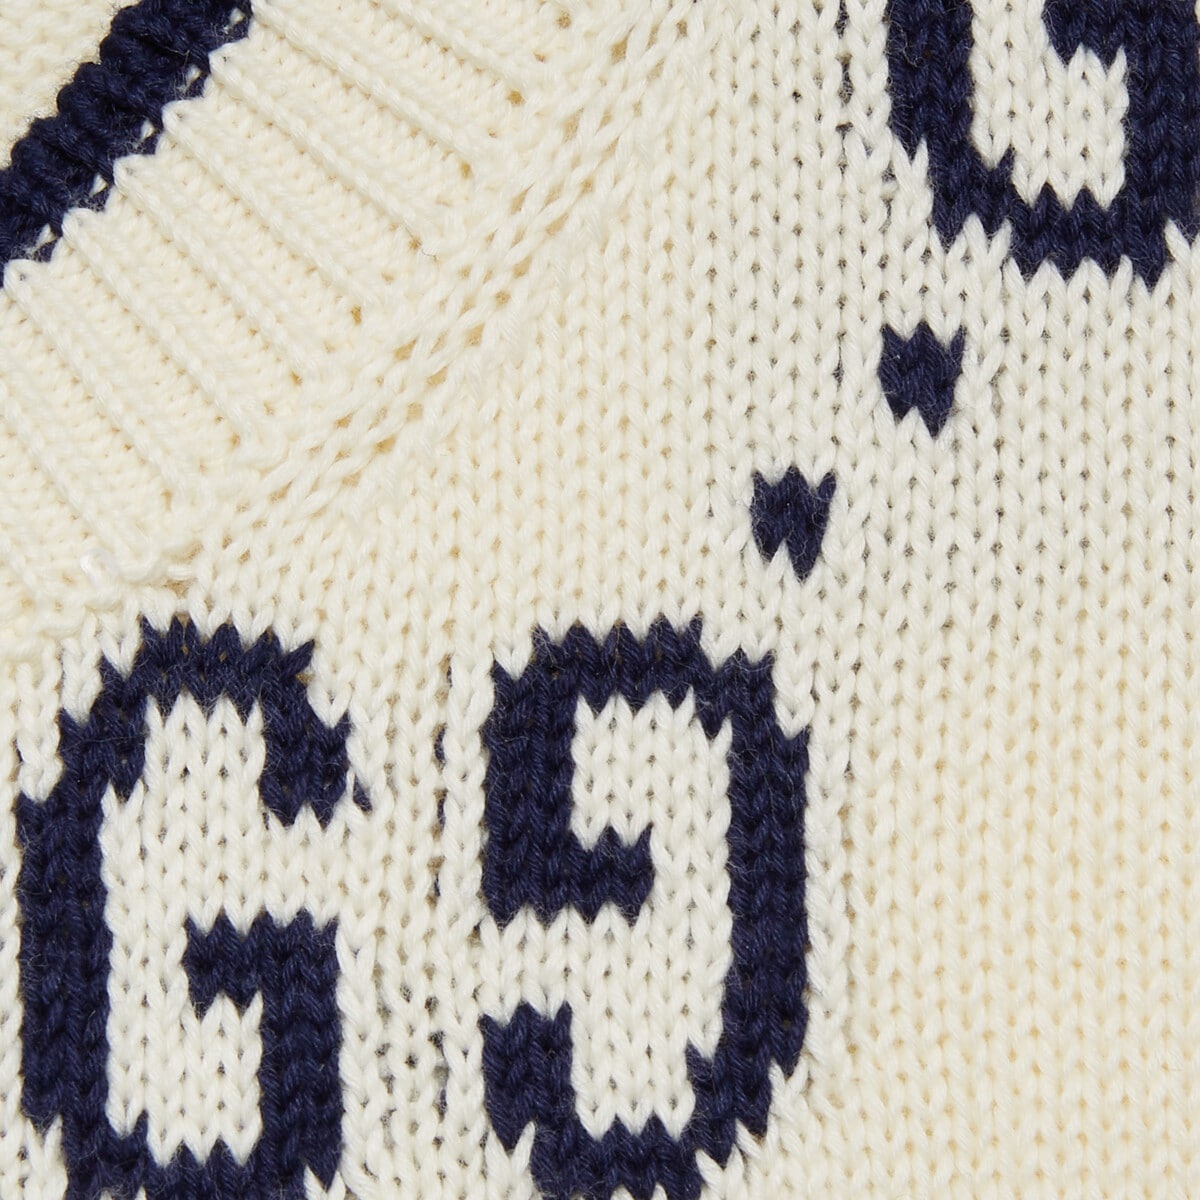 GG cotton knit sweater - 5